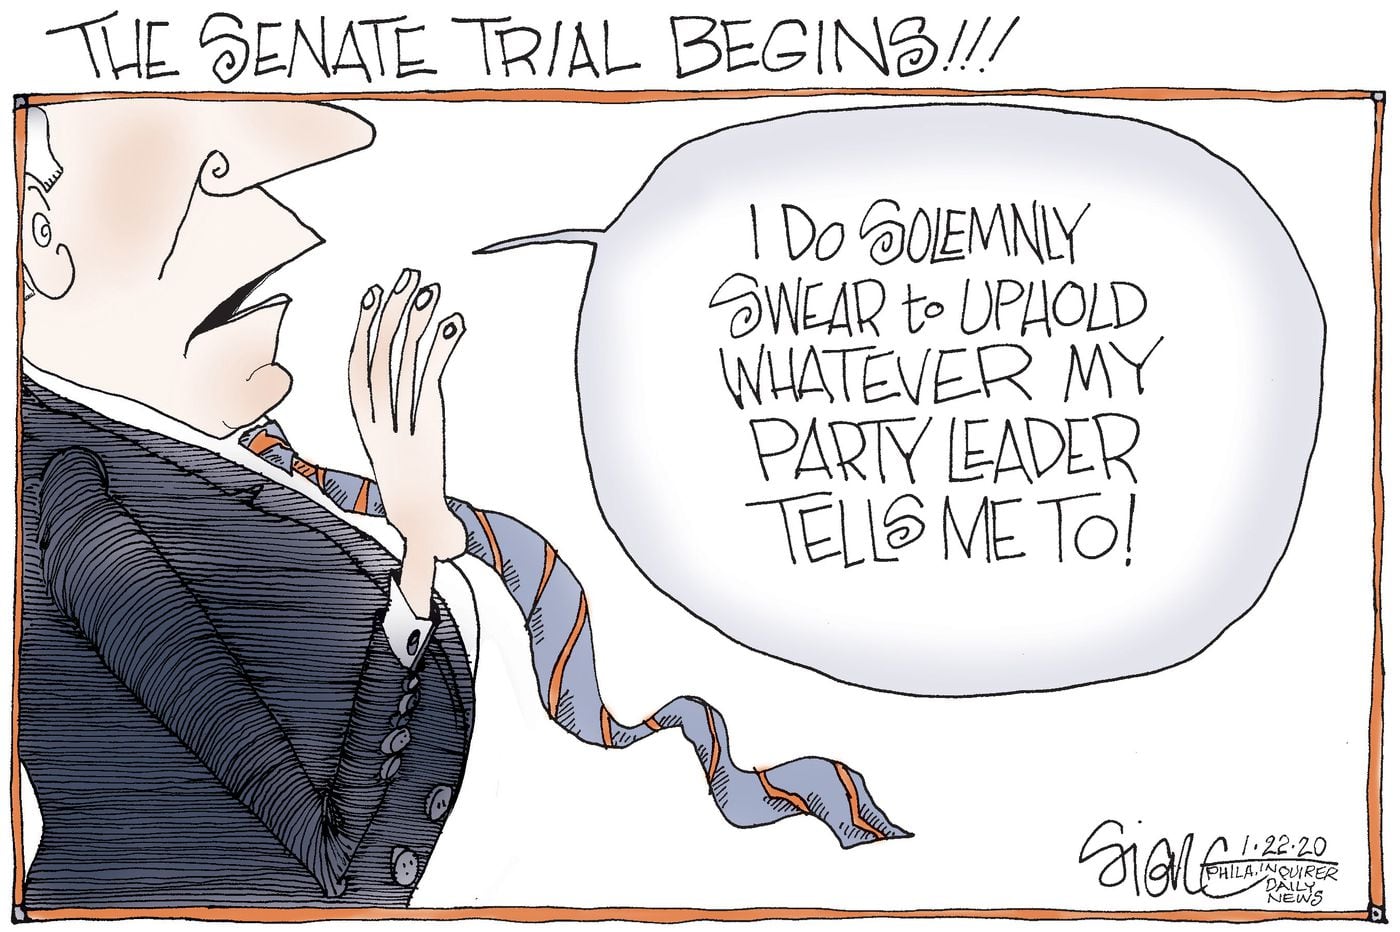 Political Cartoon: Follow the leaders in Senate impeachment trial